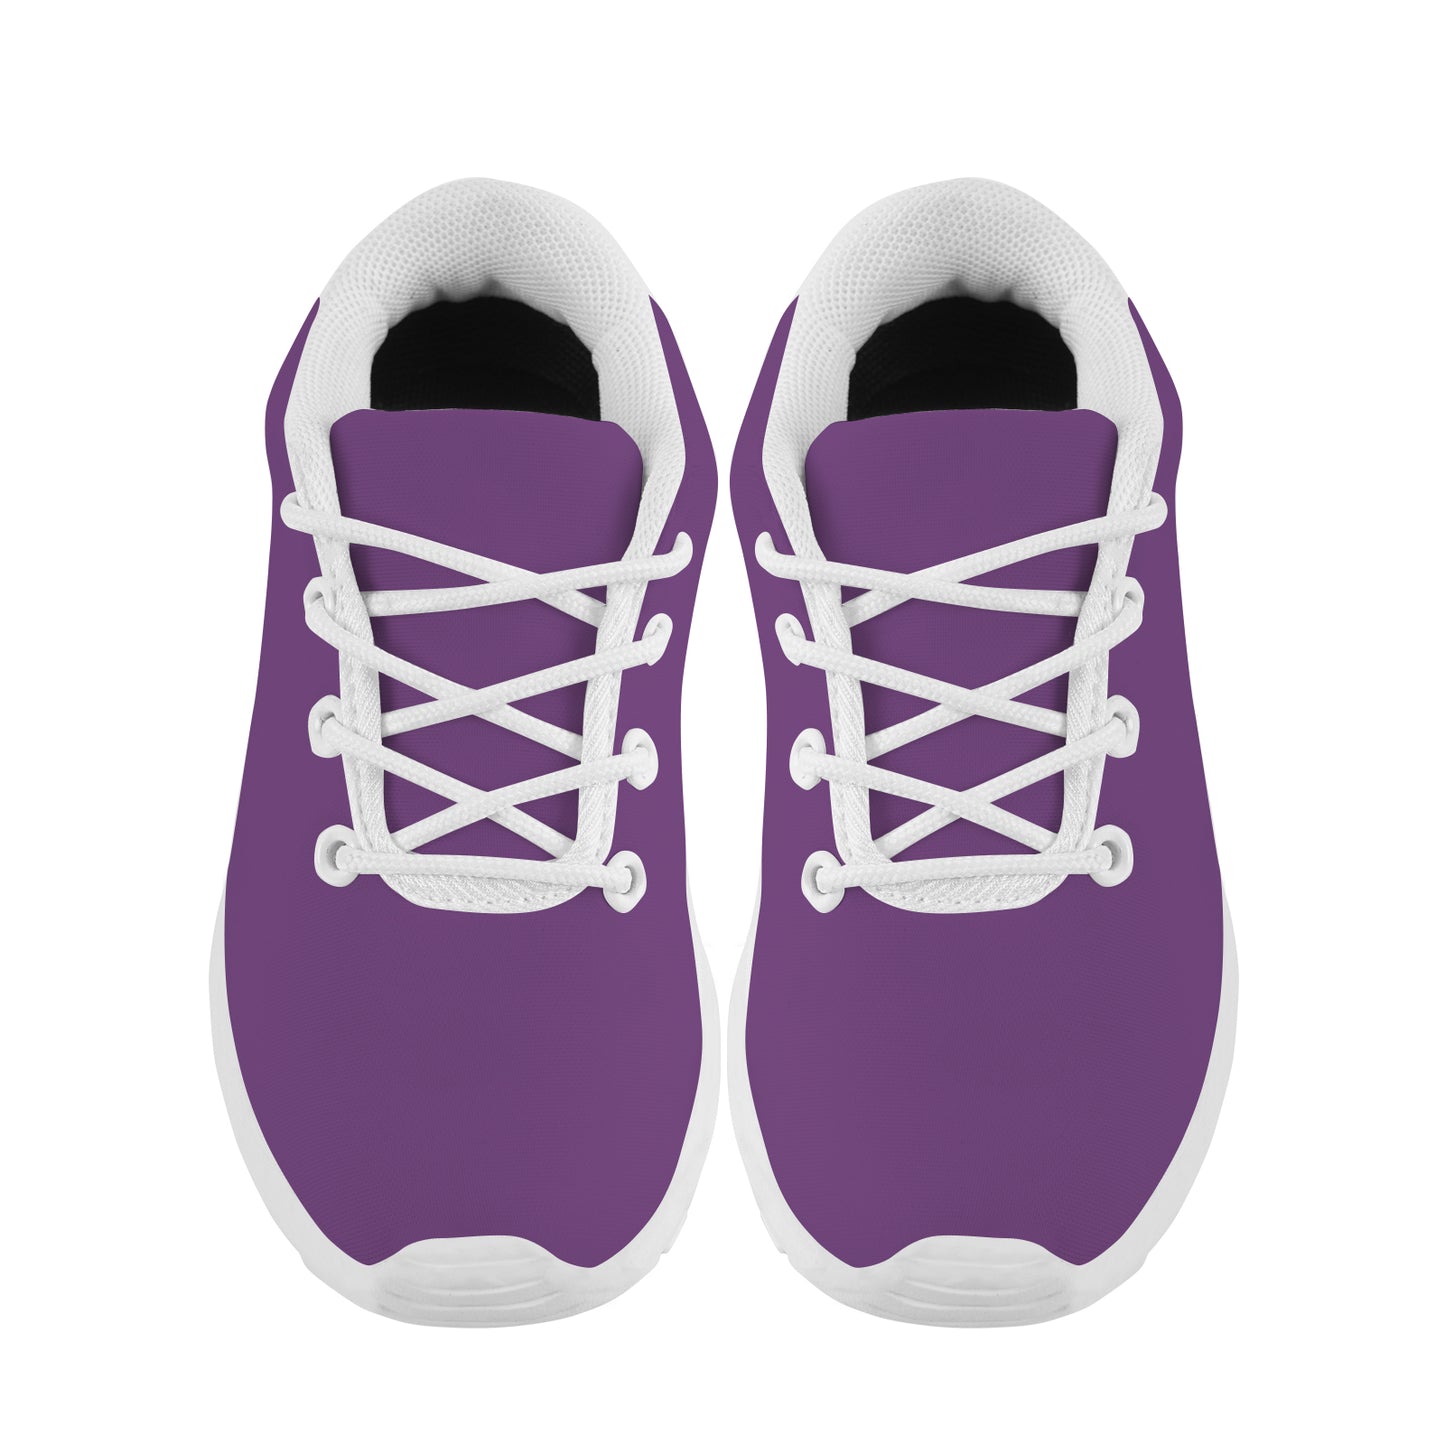 Kid's Sneakers - Classic Purple